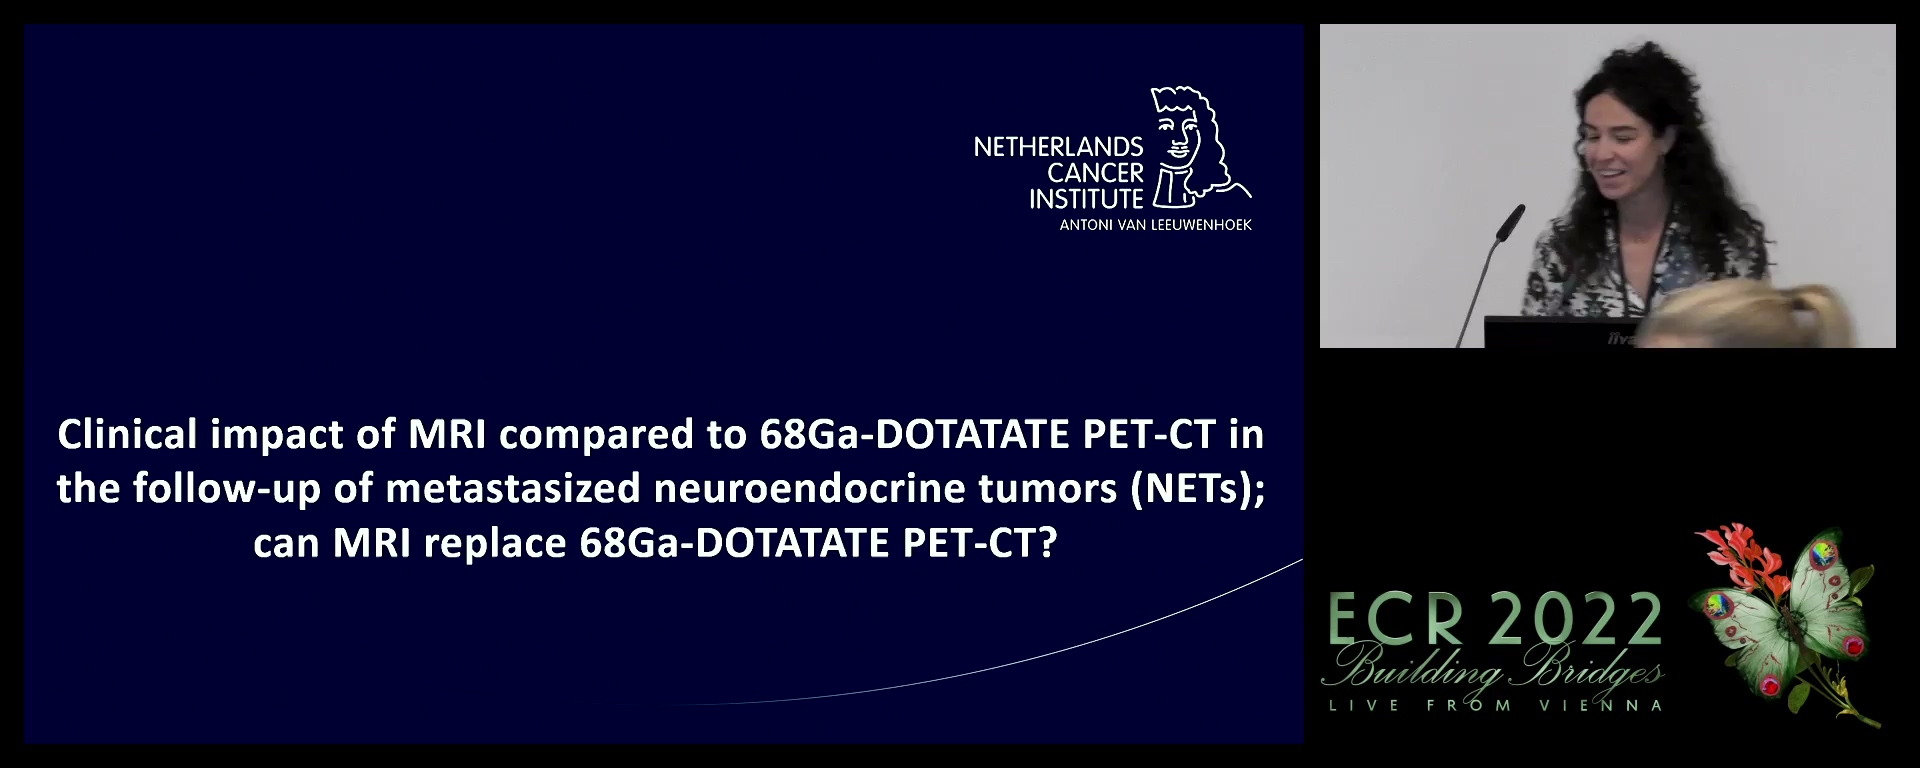 Clinical impact of MRI compared to 68Ga-DOTATATE PET-CT in monitoring metastasised neuroendocrine tumours (NETs): can MRI replace 68Ga-DOTATATE PET-CT? - Charlotte Rijsemus, Amsterdam / NL